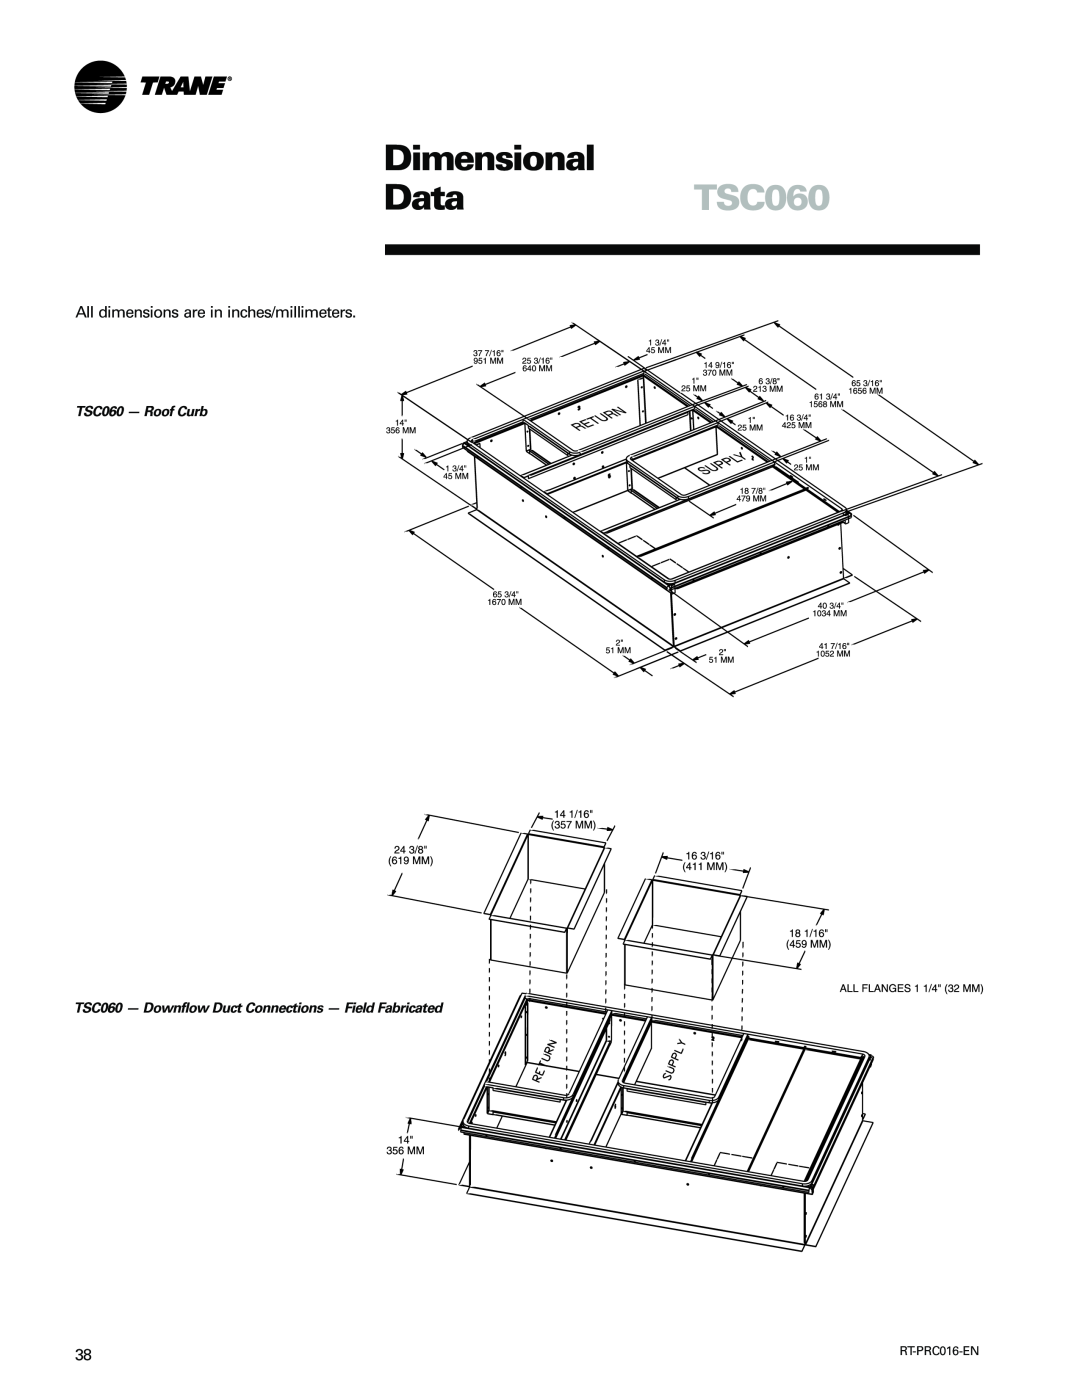 Trane TSC060-120 manual Dimensional, DataTSC060, TSC060 - Roof Curb 